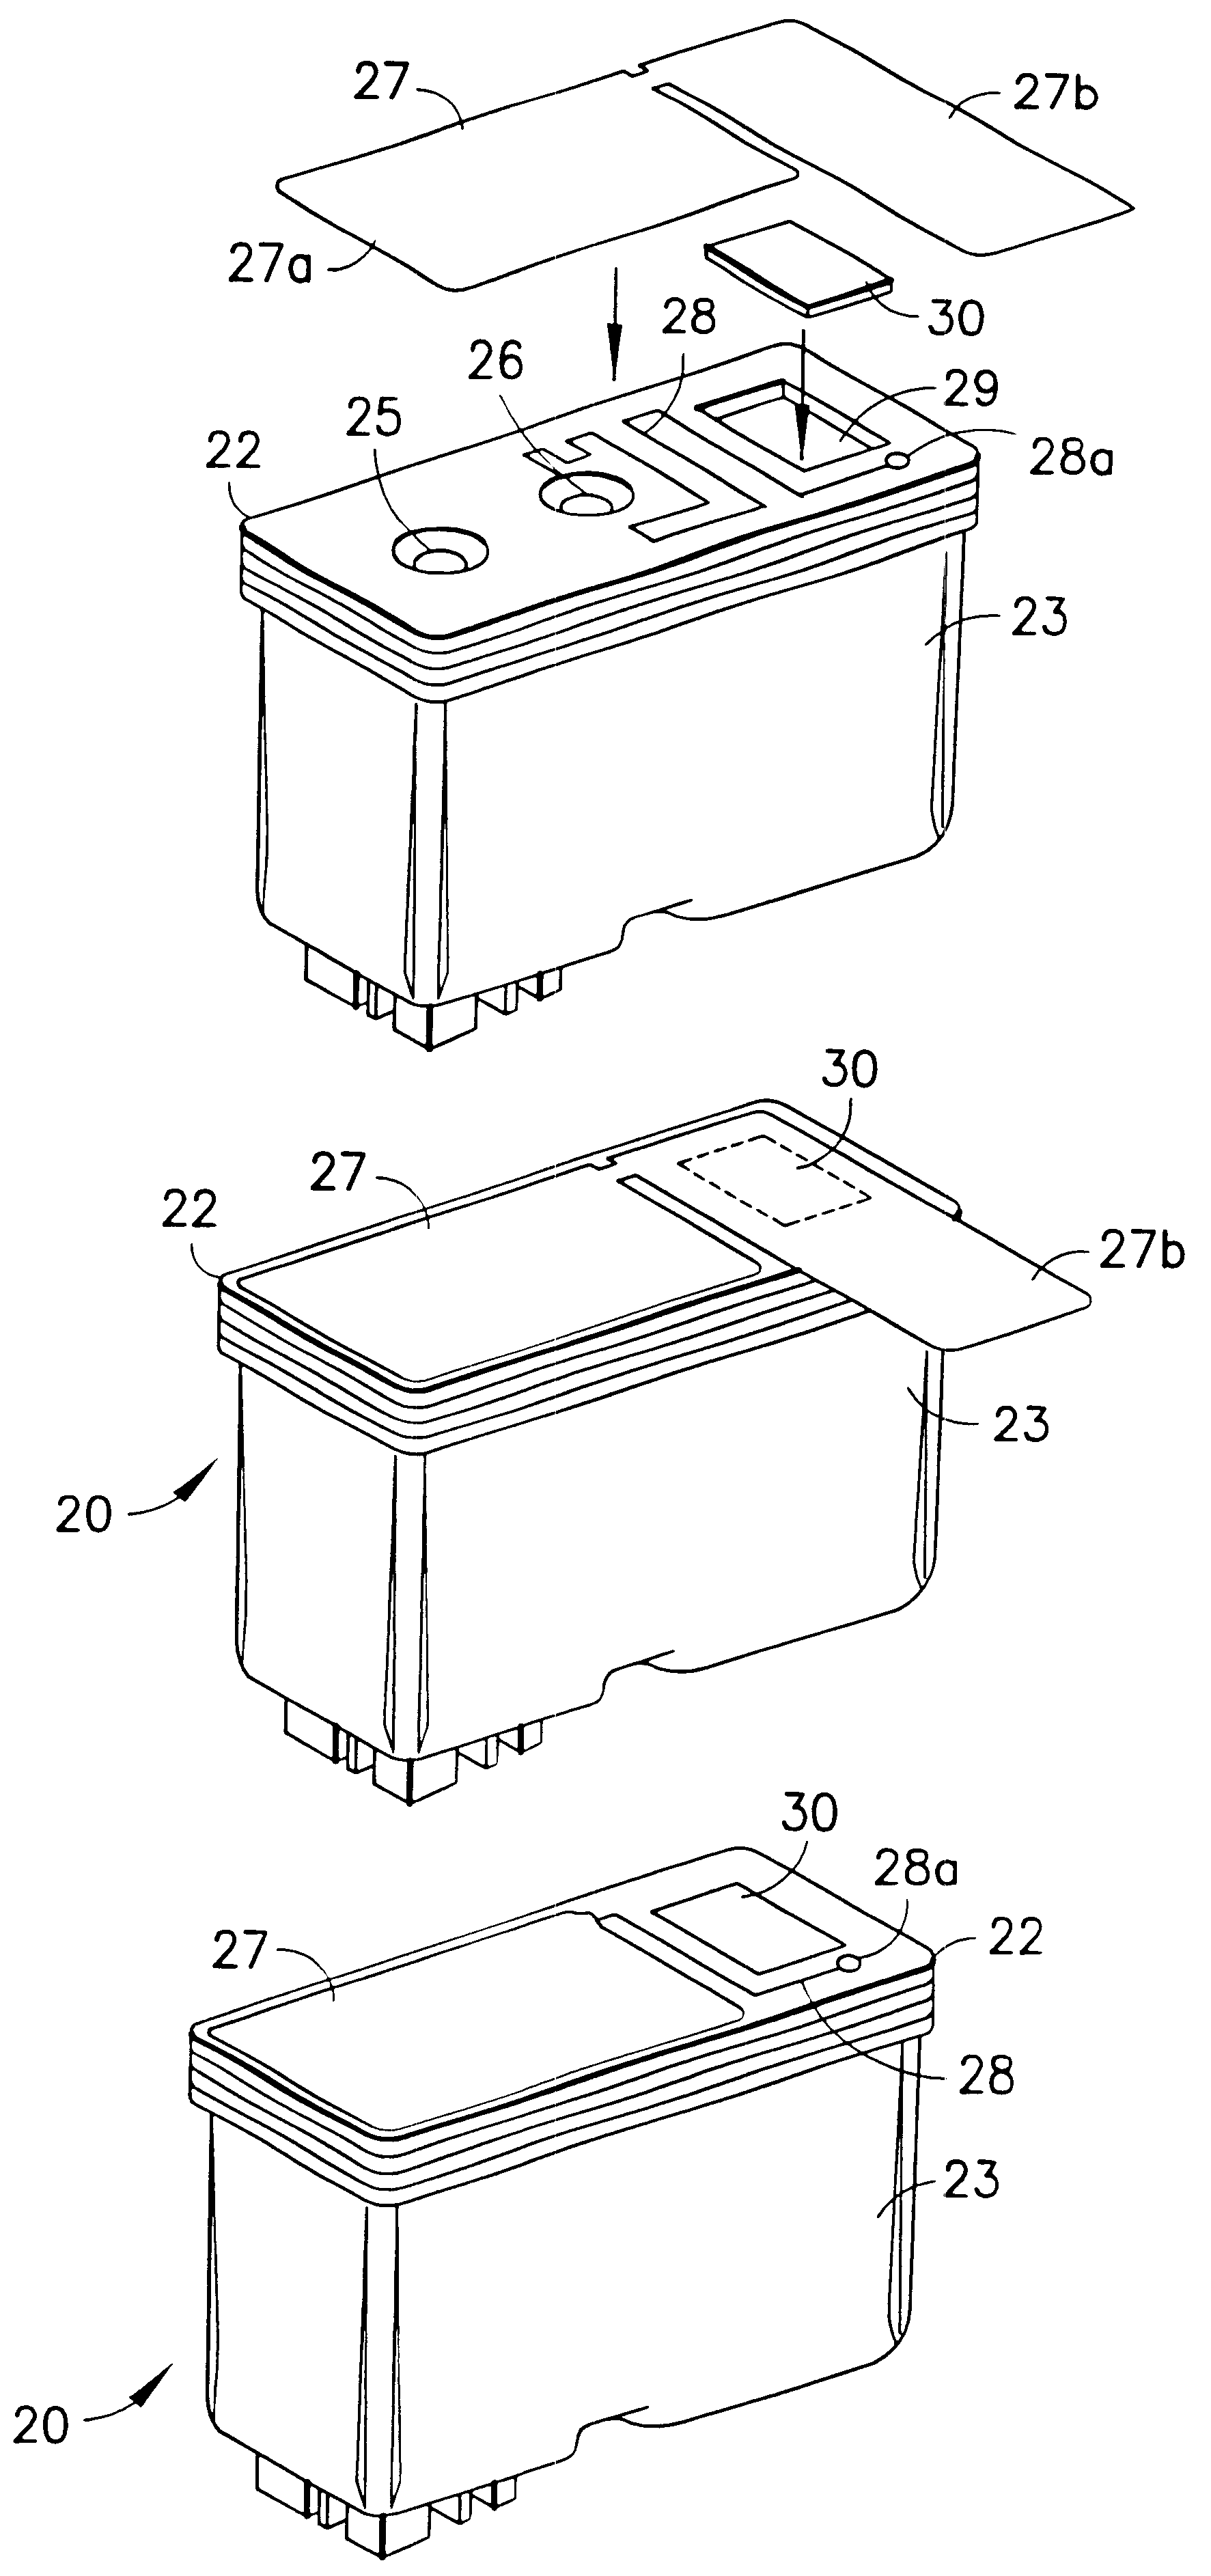 Ink cartridge for ink-jet printing apparatus